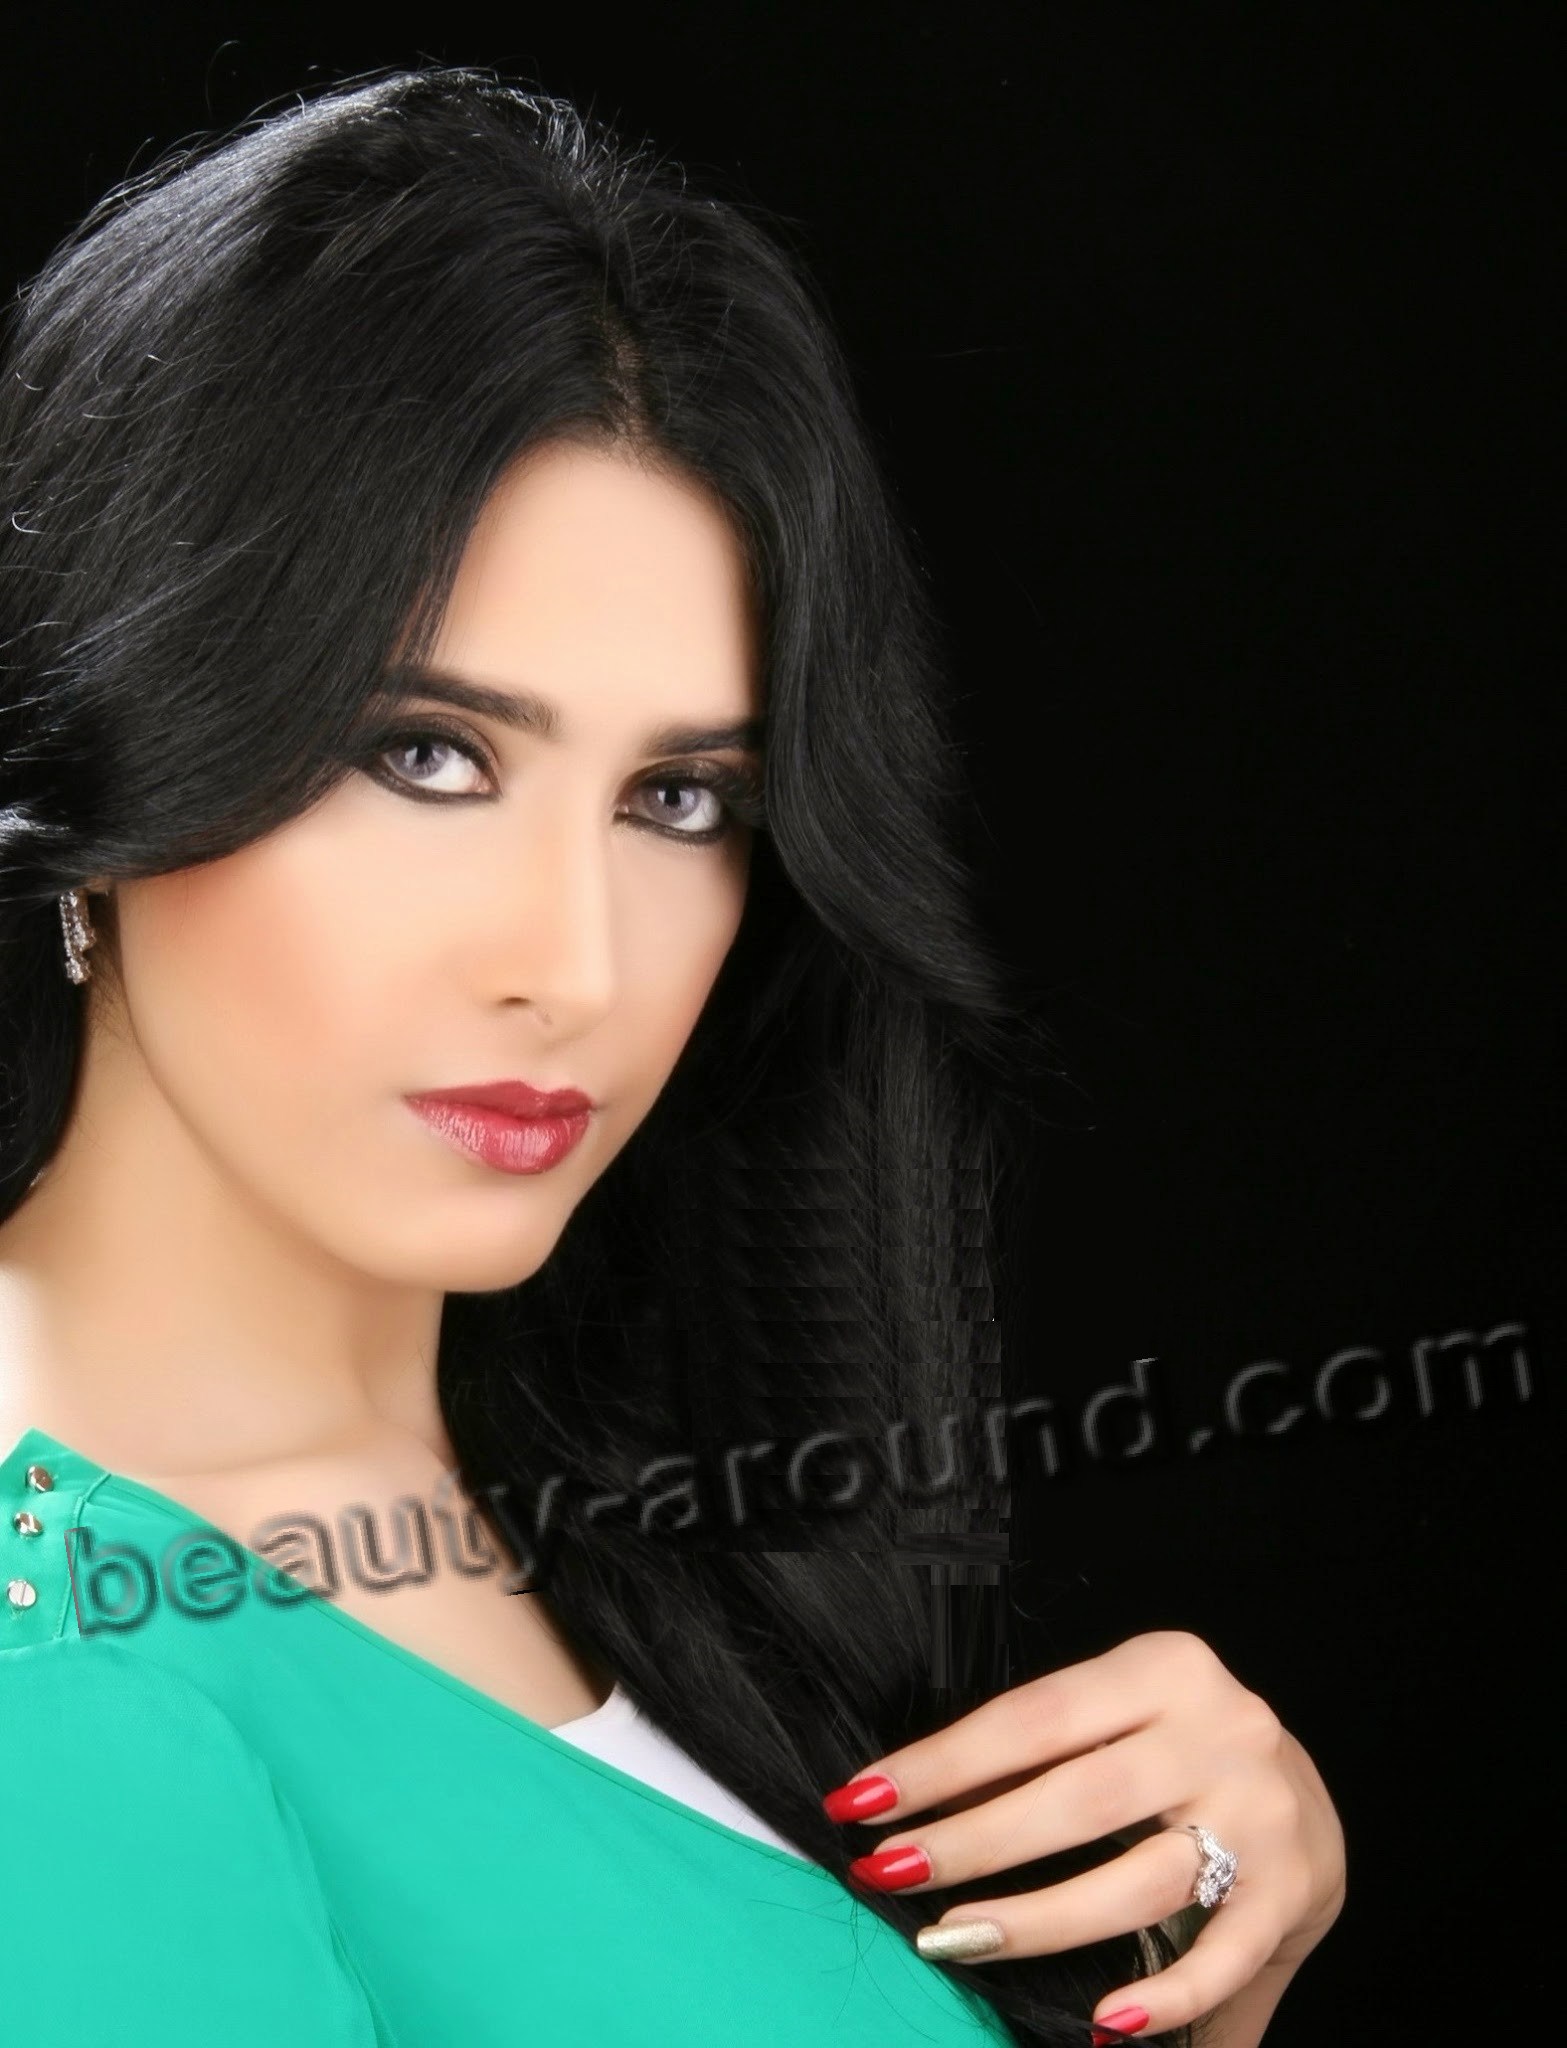 Rana al-Haddad is a Yemeni singer picture